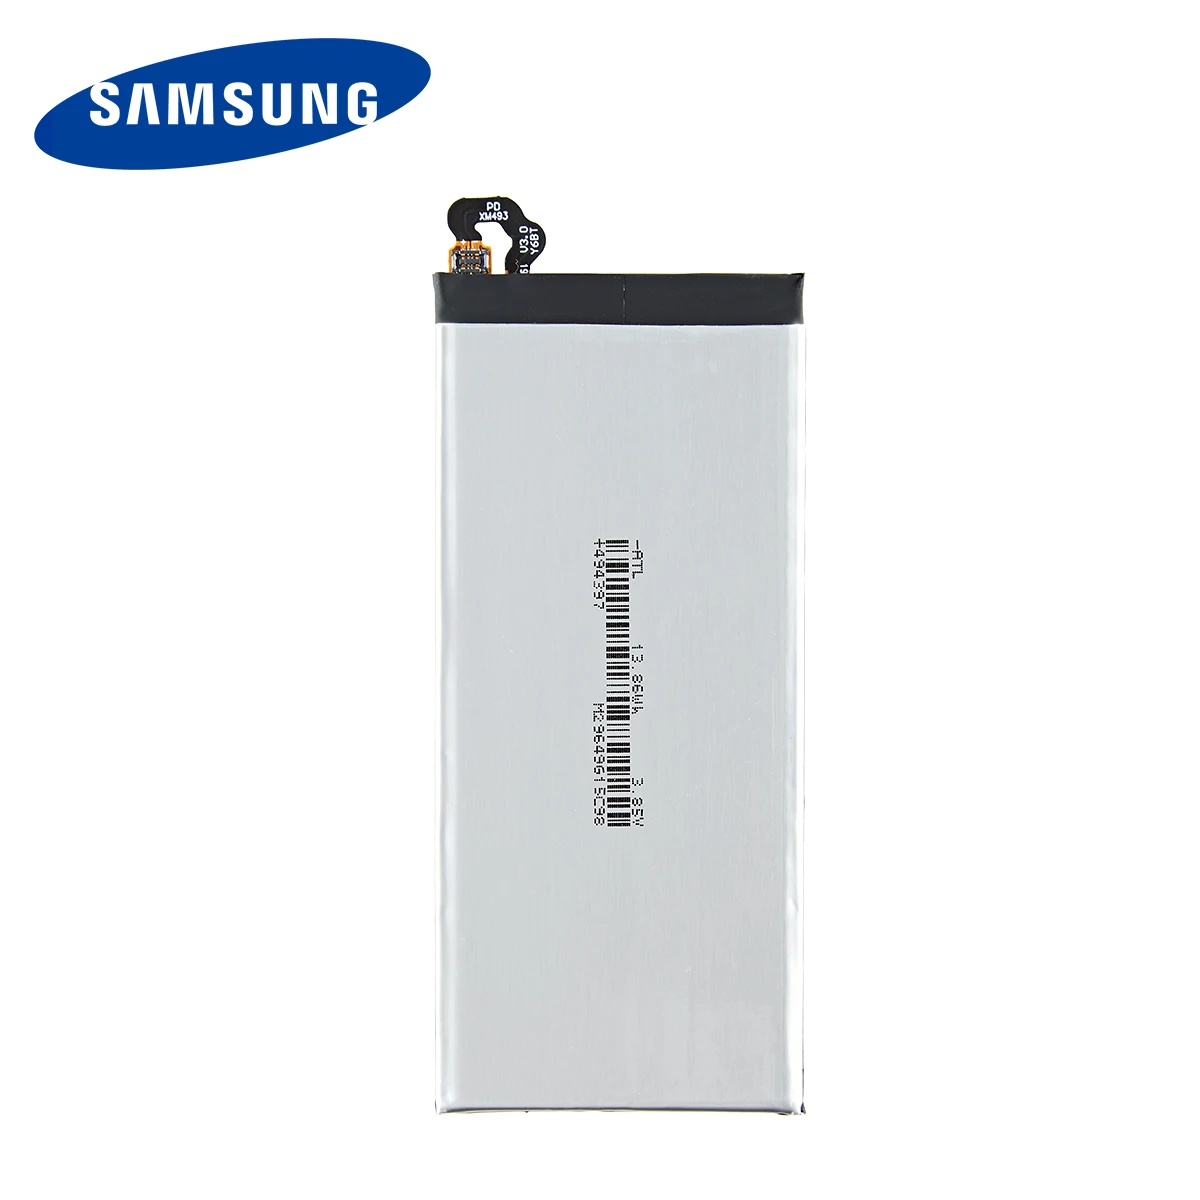 Оригинална батерия SAMSUNG EB-BA720ABE 3600 mah за Samsung Galaxy A7 2017 версия A720 SM-A720 A720F SM-A720S A720F/DS